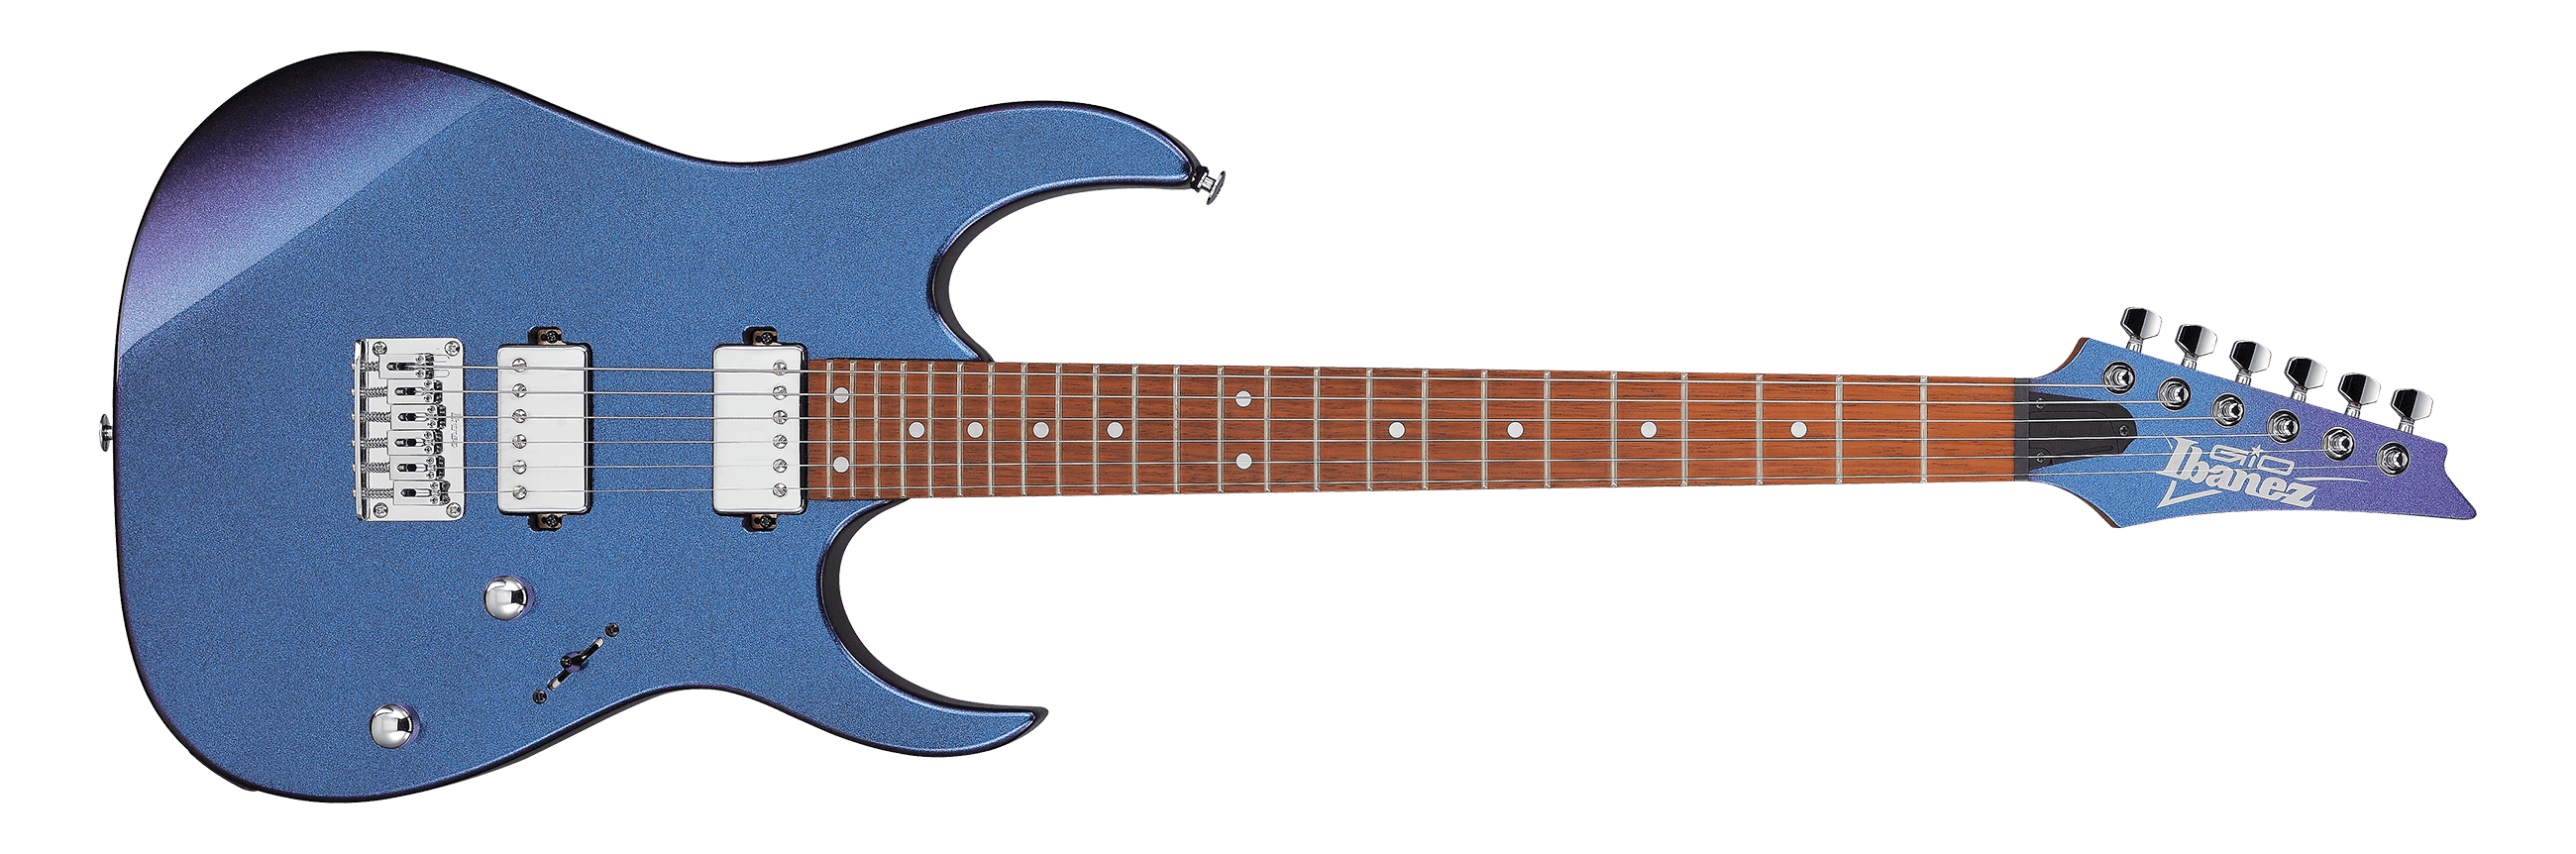 Ibañez - Guitarra Eléctrica Gio RG, Color: Azul Metalico Tornasol Mod.GRG121SP-BMC_24